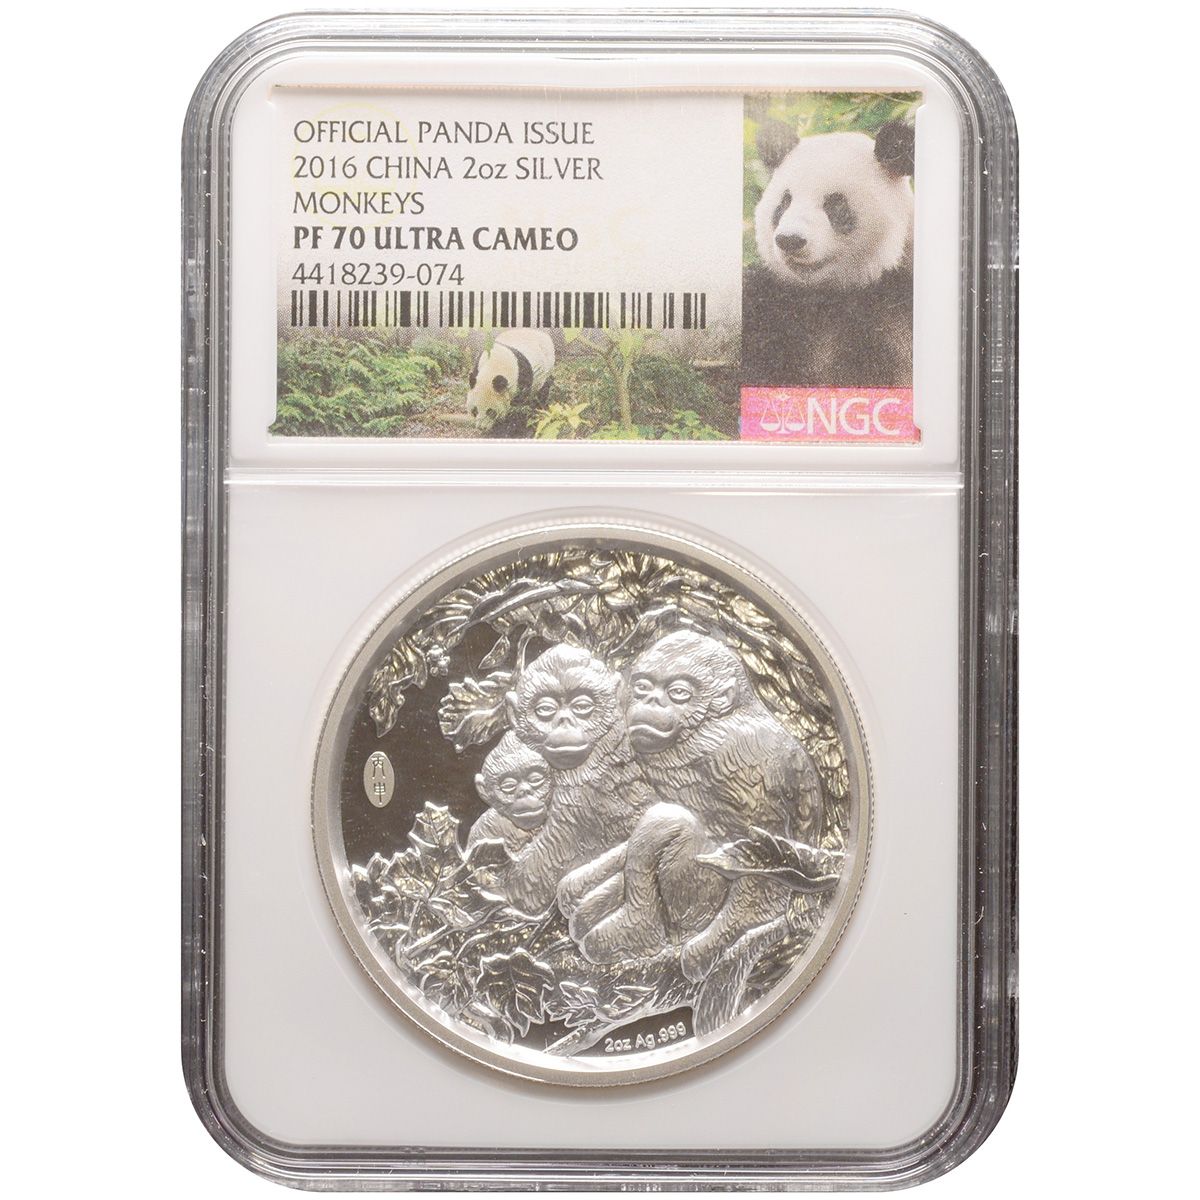 2016 SILVER MONKEYS China 2oz Silver Coin - OZB